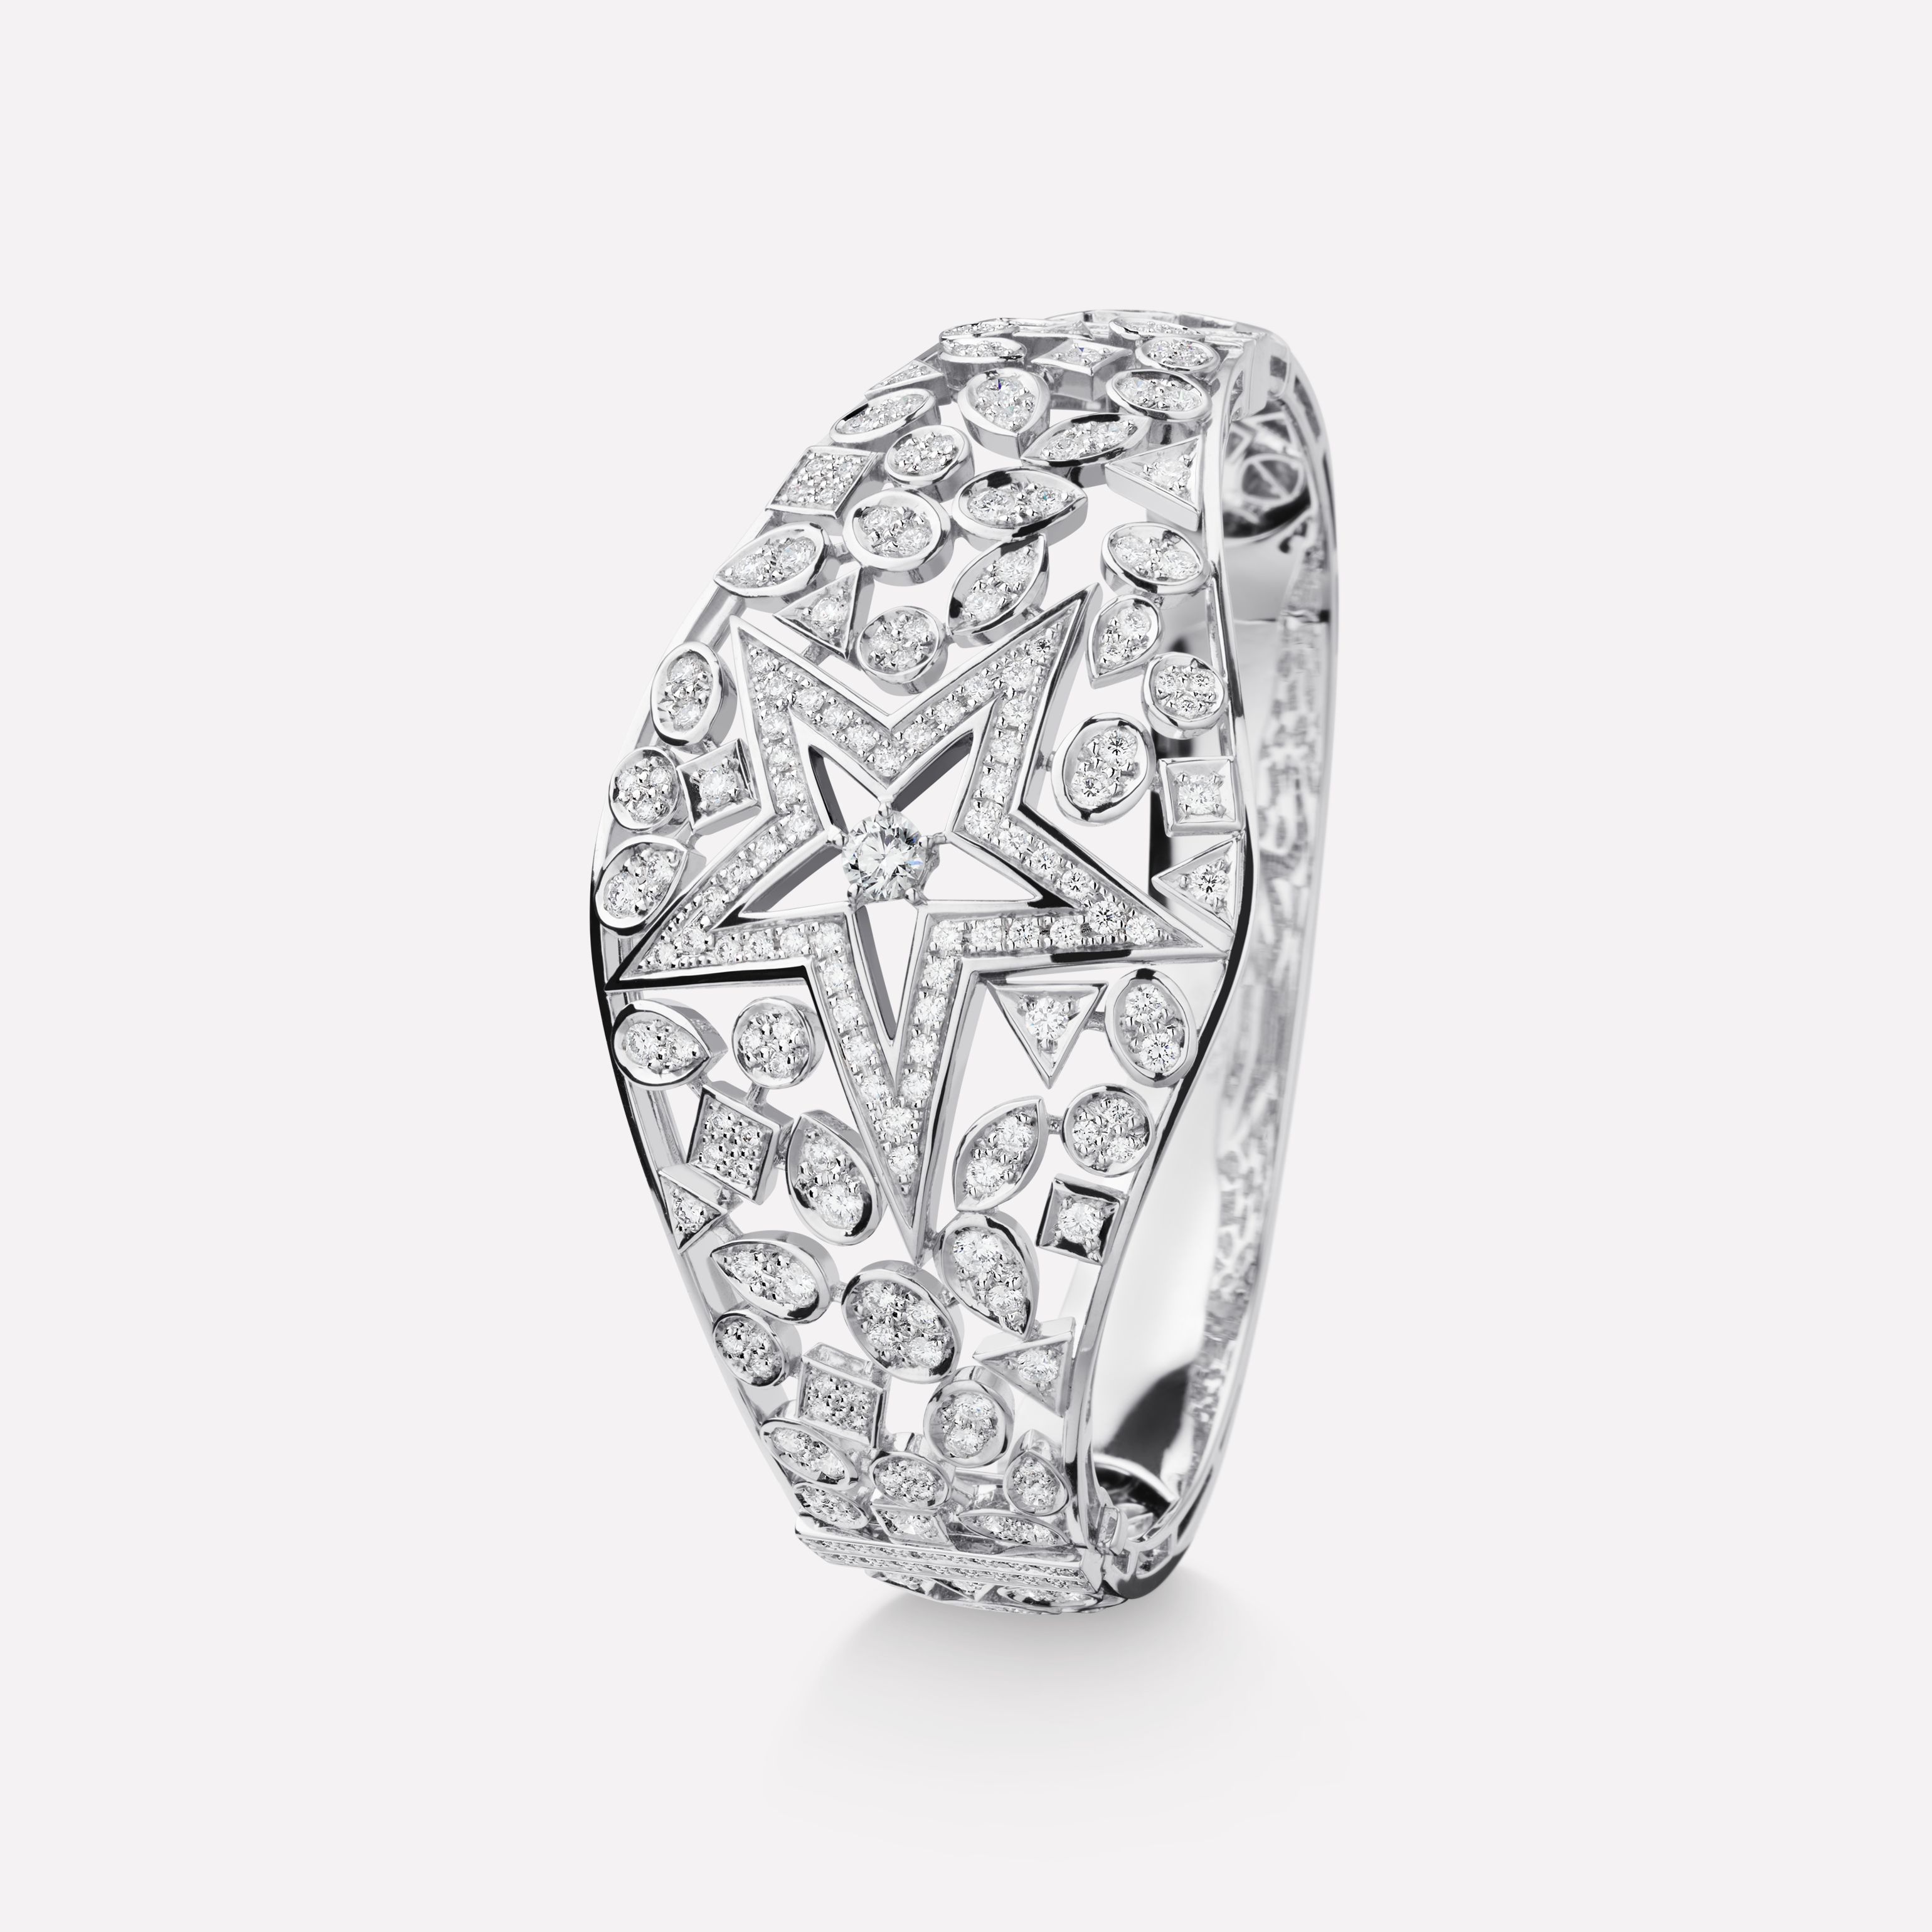 COMÈTE系列手镯 手镯，星星图案，白18K金，镶嵌钻石与中央主钻